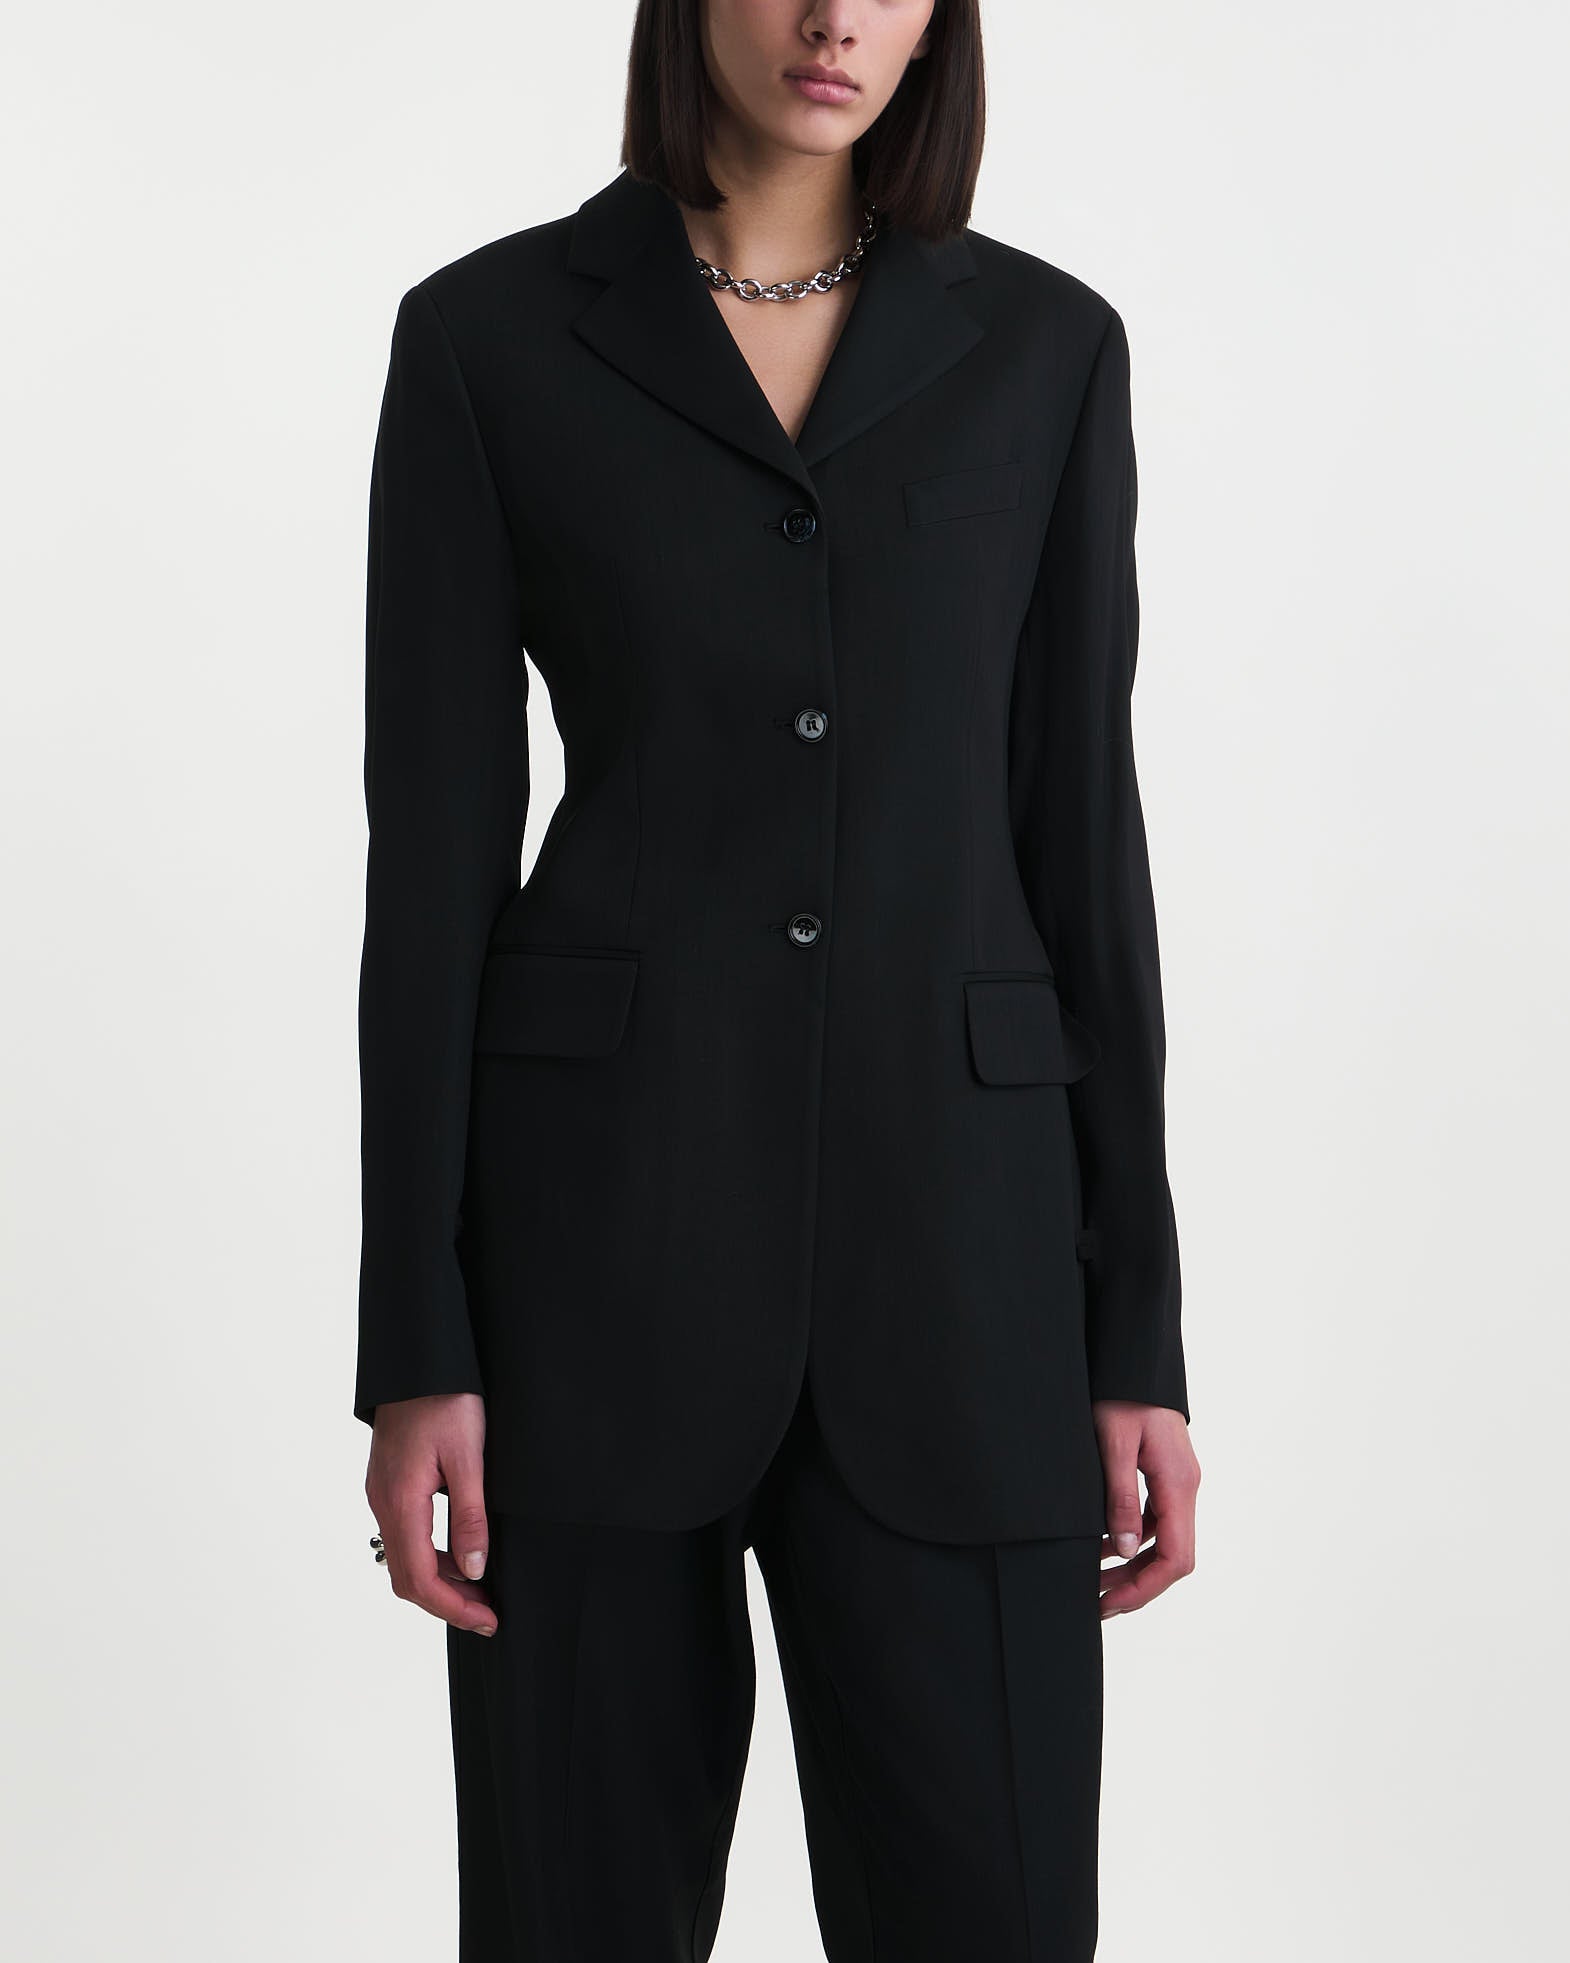 Acne Studios Blazer Single Breasted Suit Black von Acne Studios